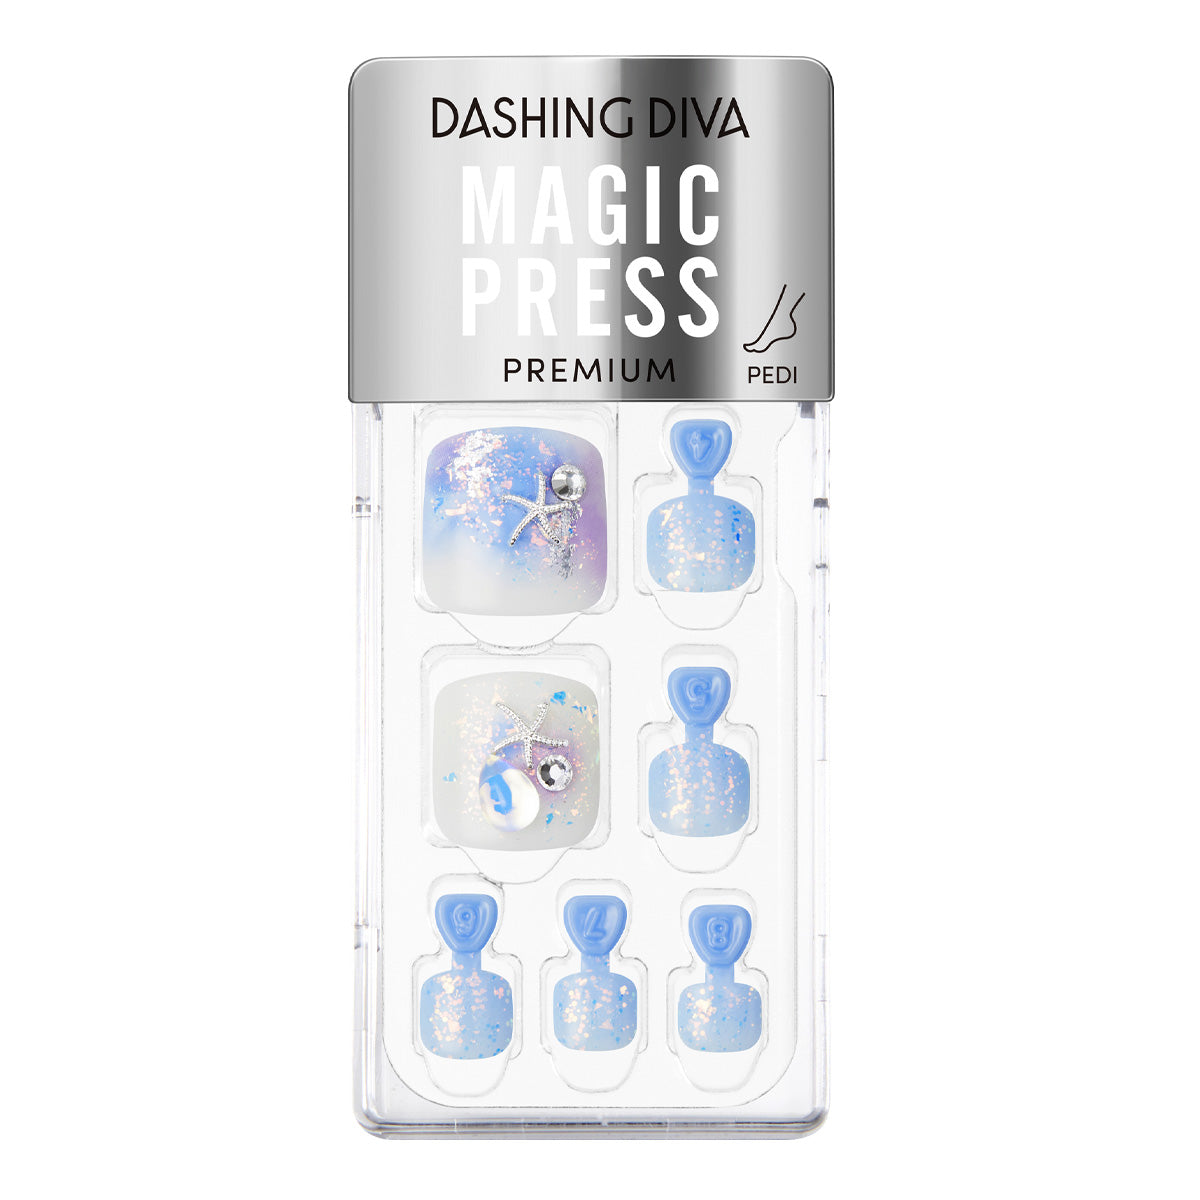 DASHING DIVA Magic Press Premium Regular Pedi Aqua Rhythm MDR3S062PP